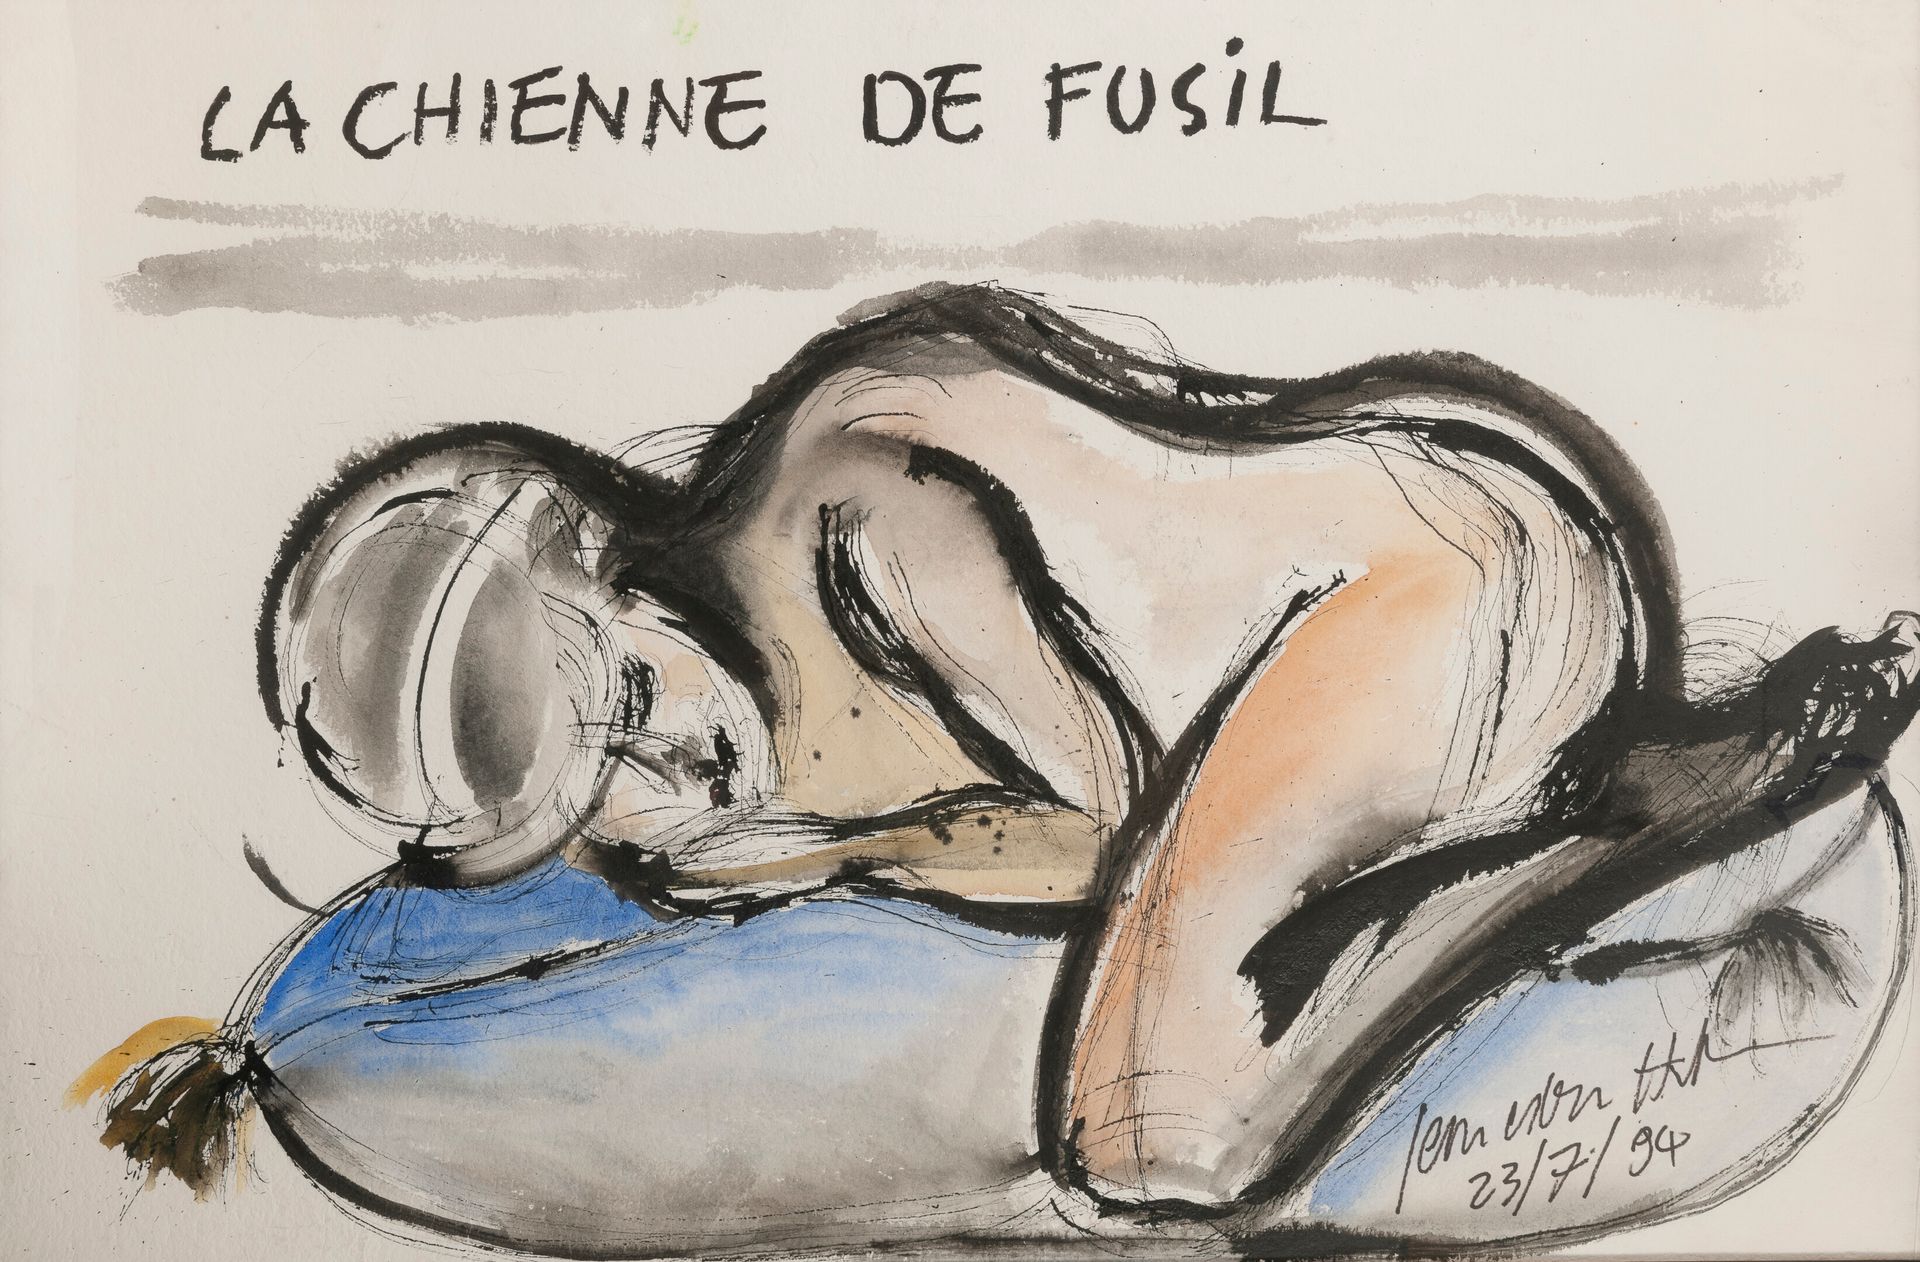 Jean Edern HALLIER (1936-1997) La chienne de fusil, 1994. 

Ink and watercolor o&hellip;